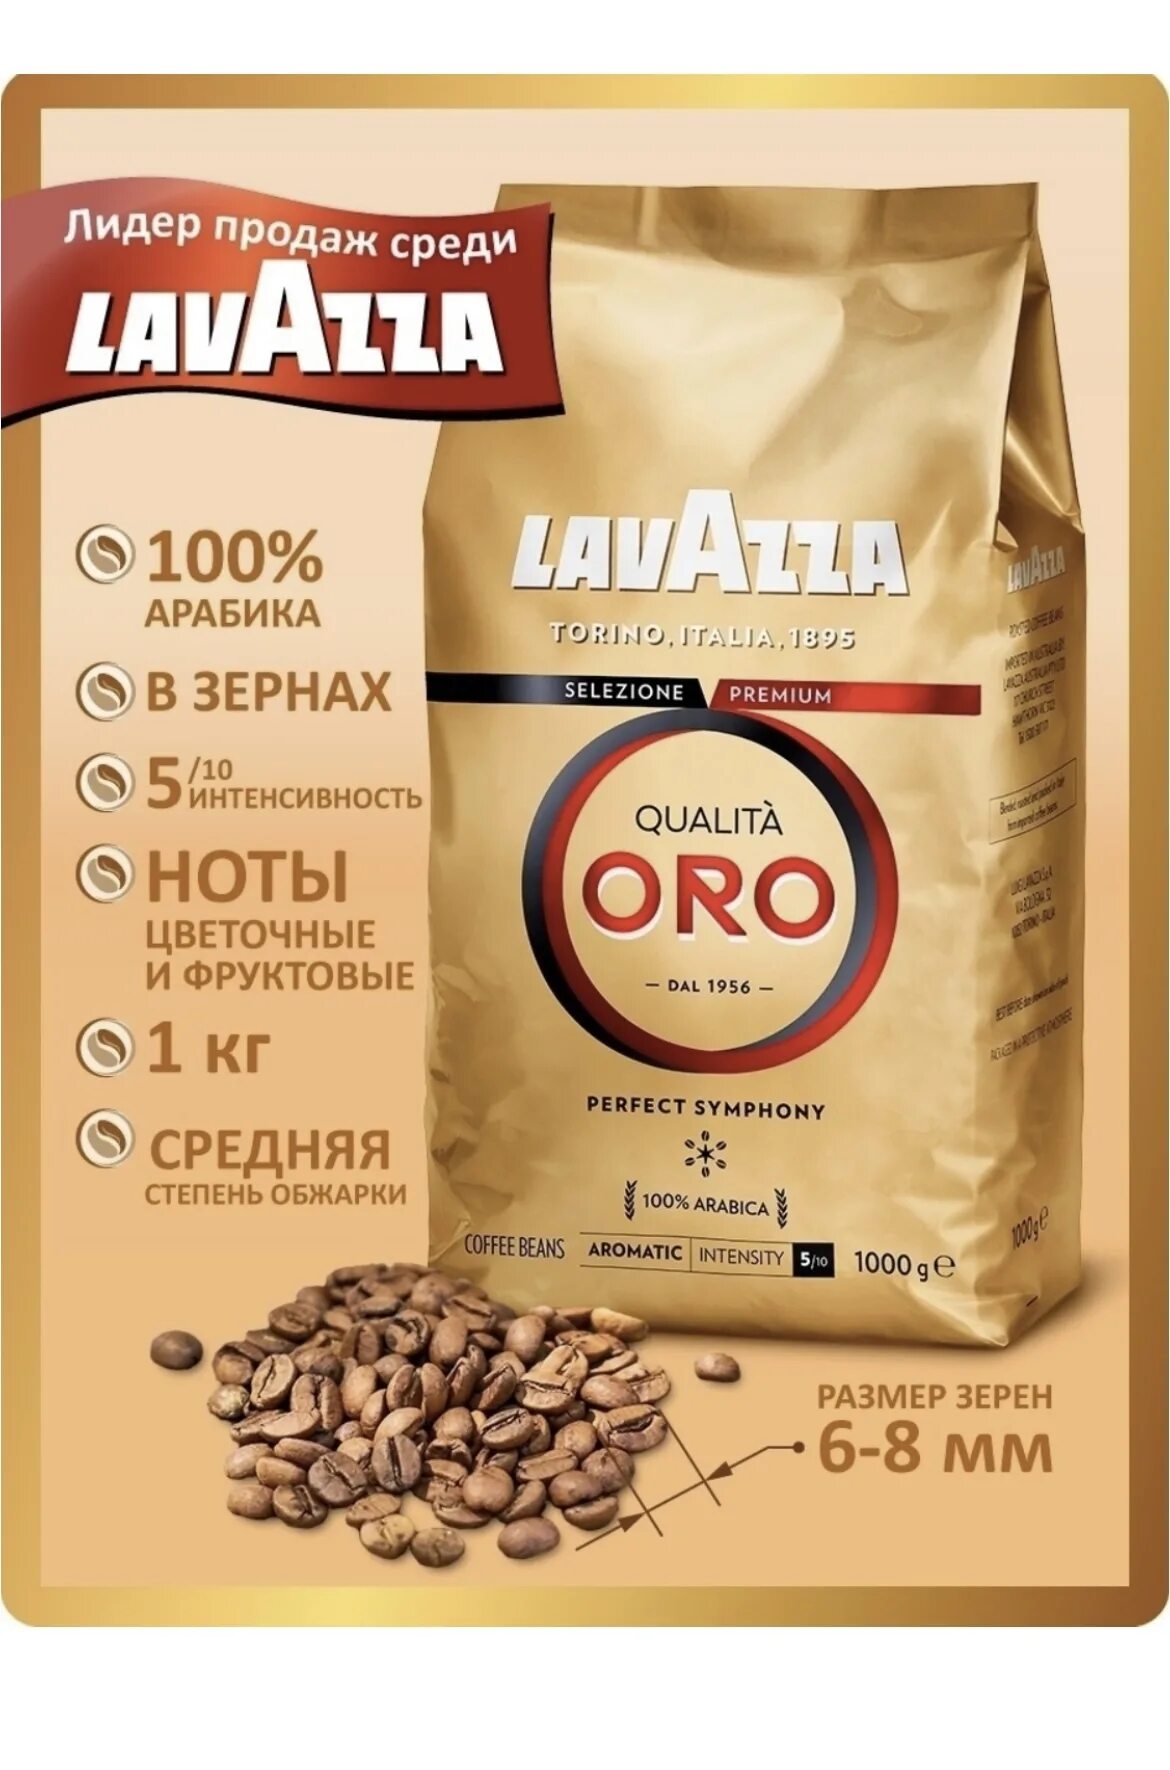 Oro кофе в зернах купить. Кофе Lavazza Oro в зернах. Кофе Лавацца Оро 1 кг. Lavazza qualita Oro 1 кг. Кофе в зернах Lavazza Oro 1 кг.